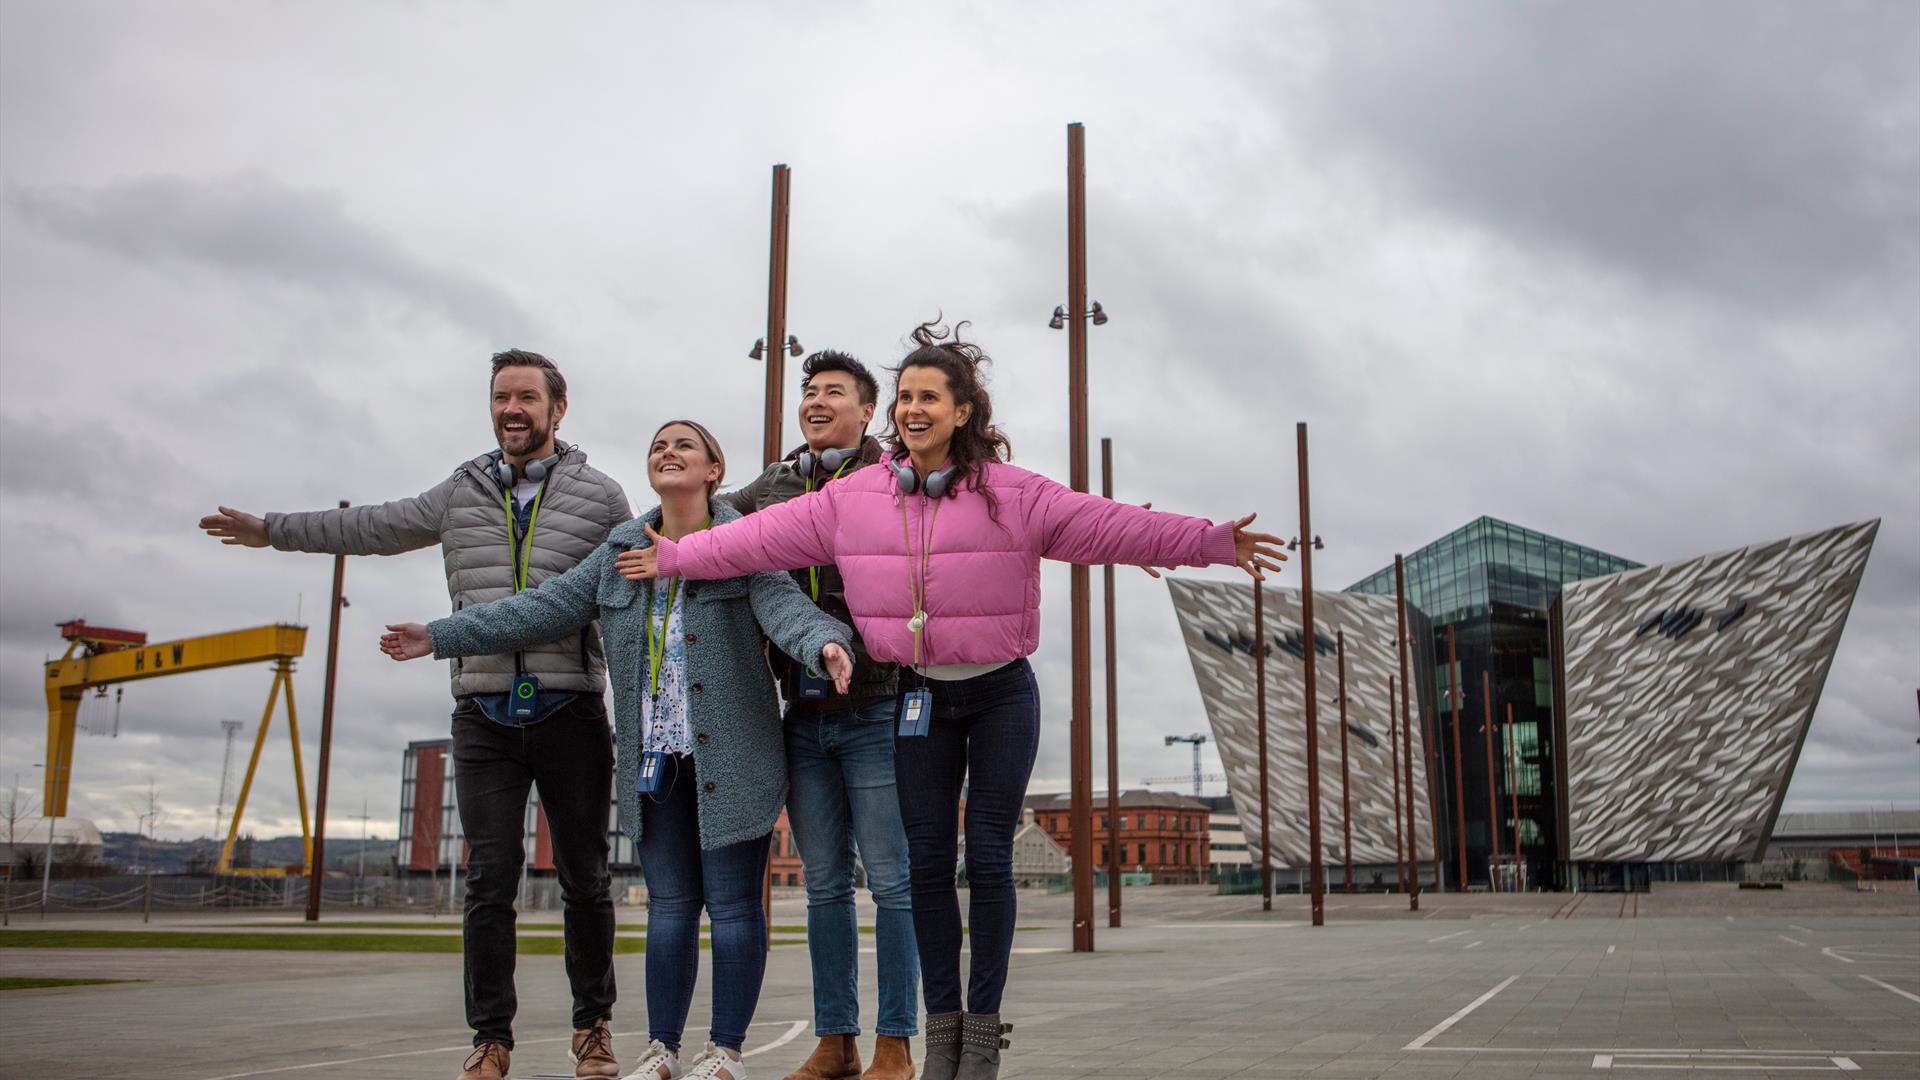 Group has fun posing outside Titanic Belfast building